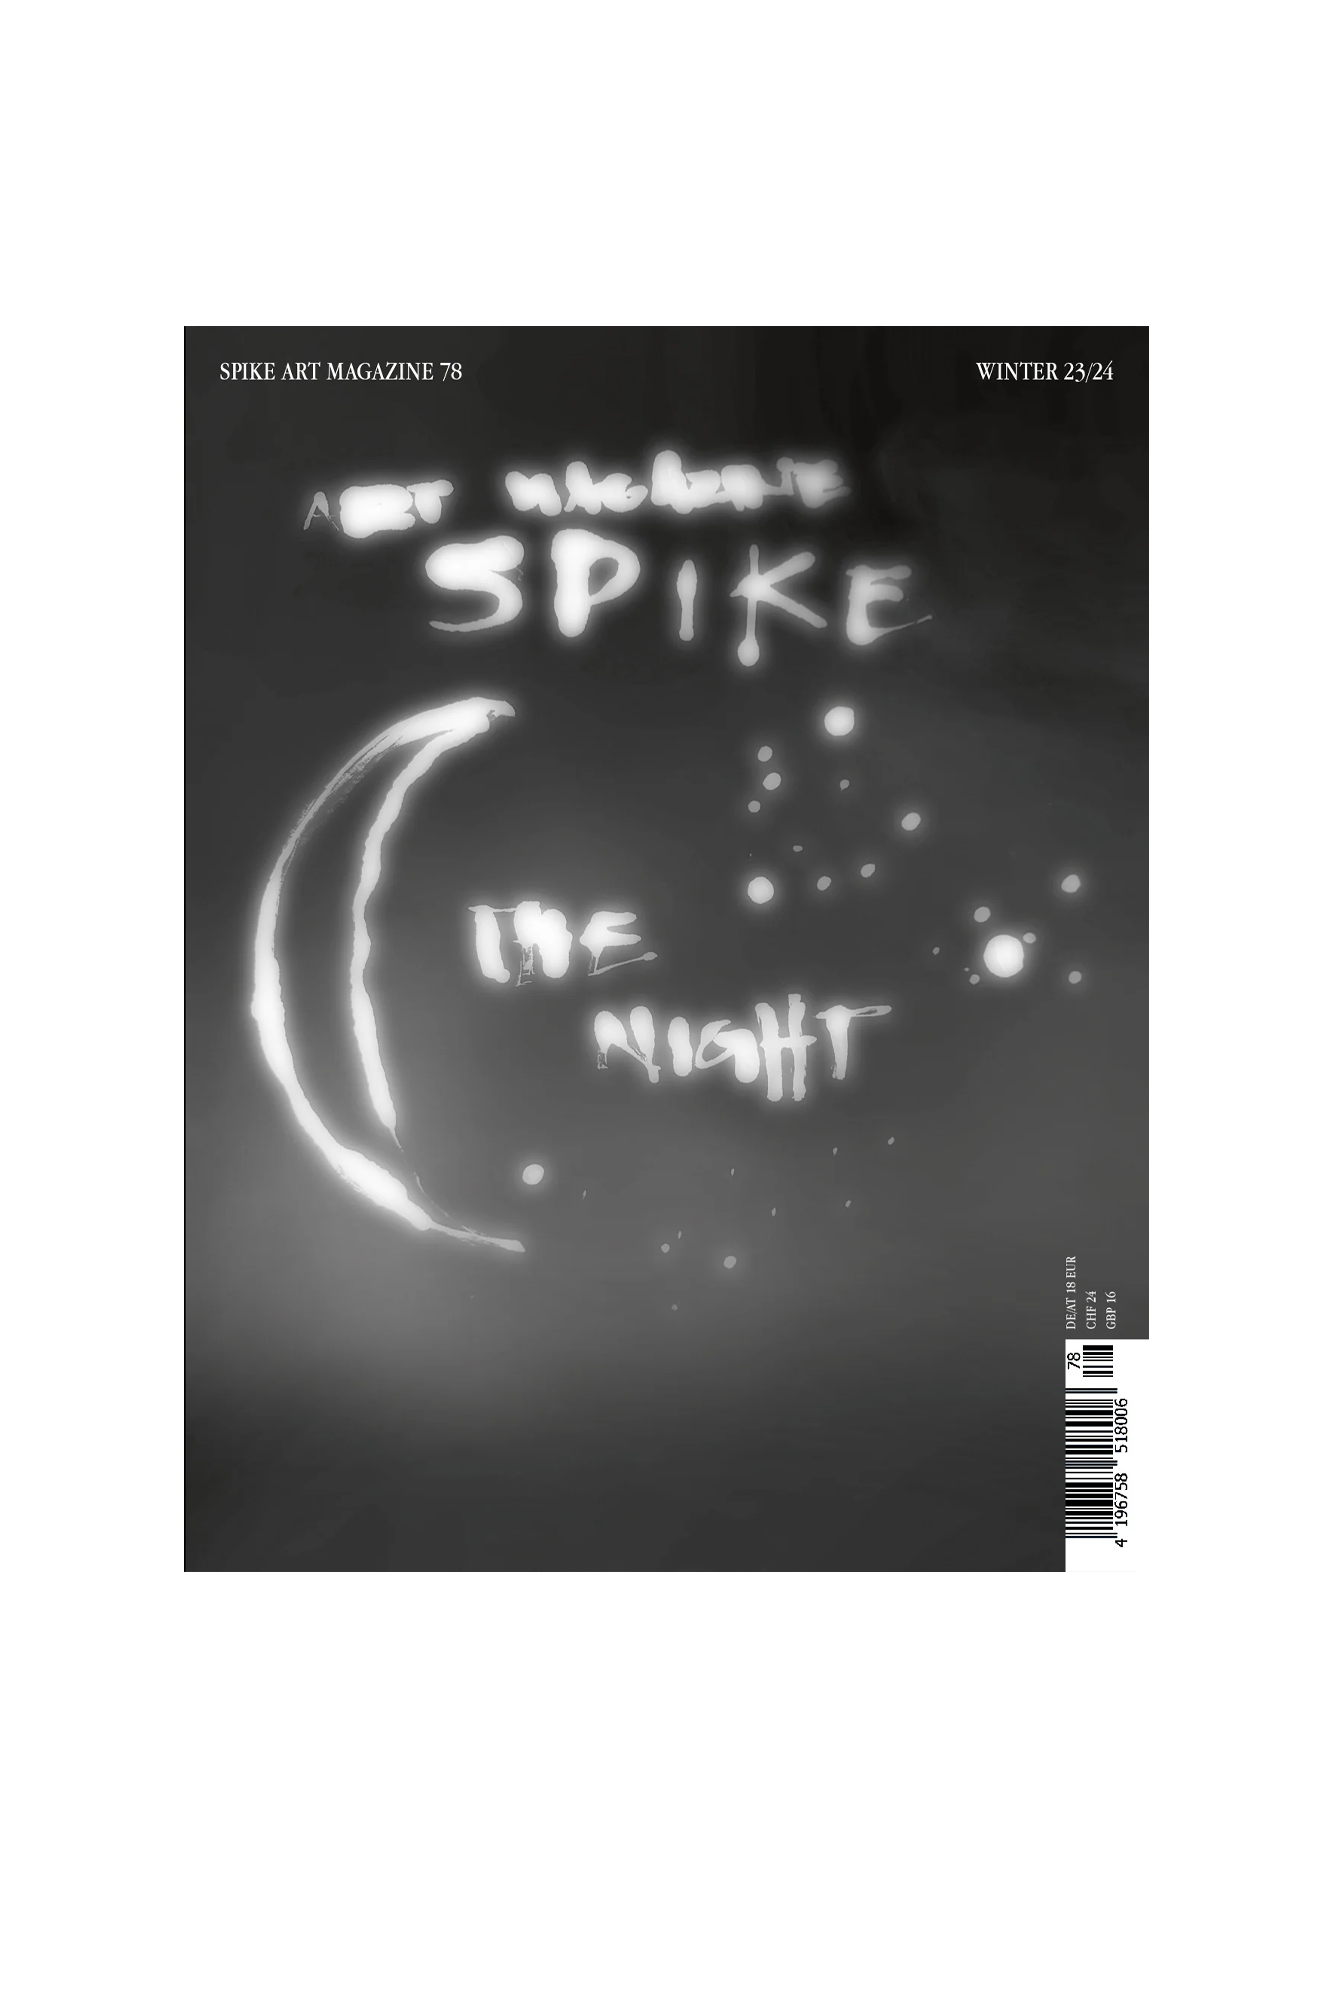 Issue 78 Winter 23/24 "The Night"